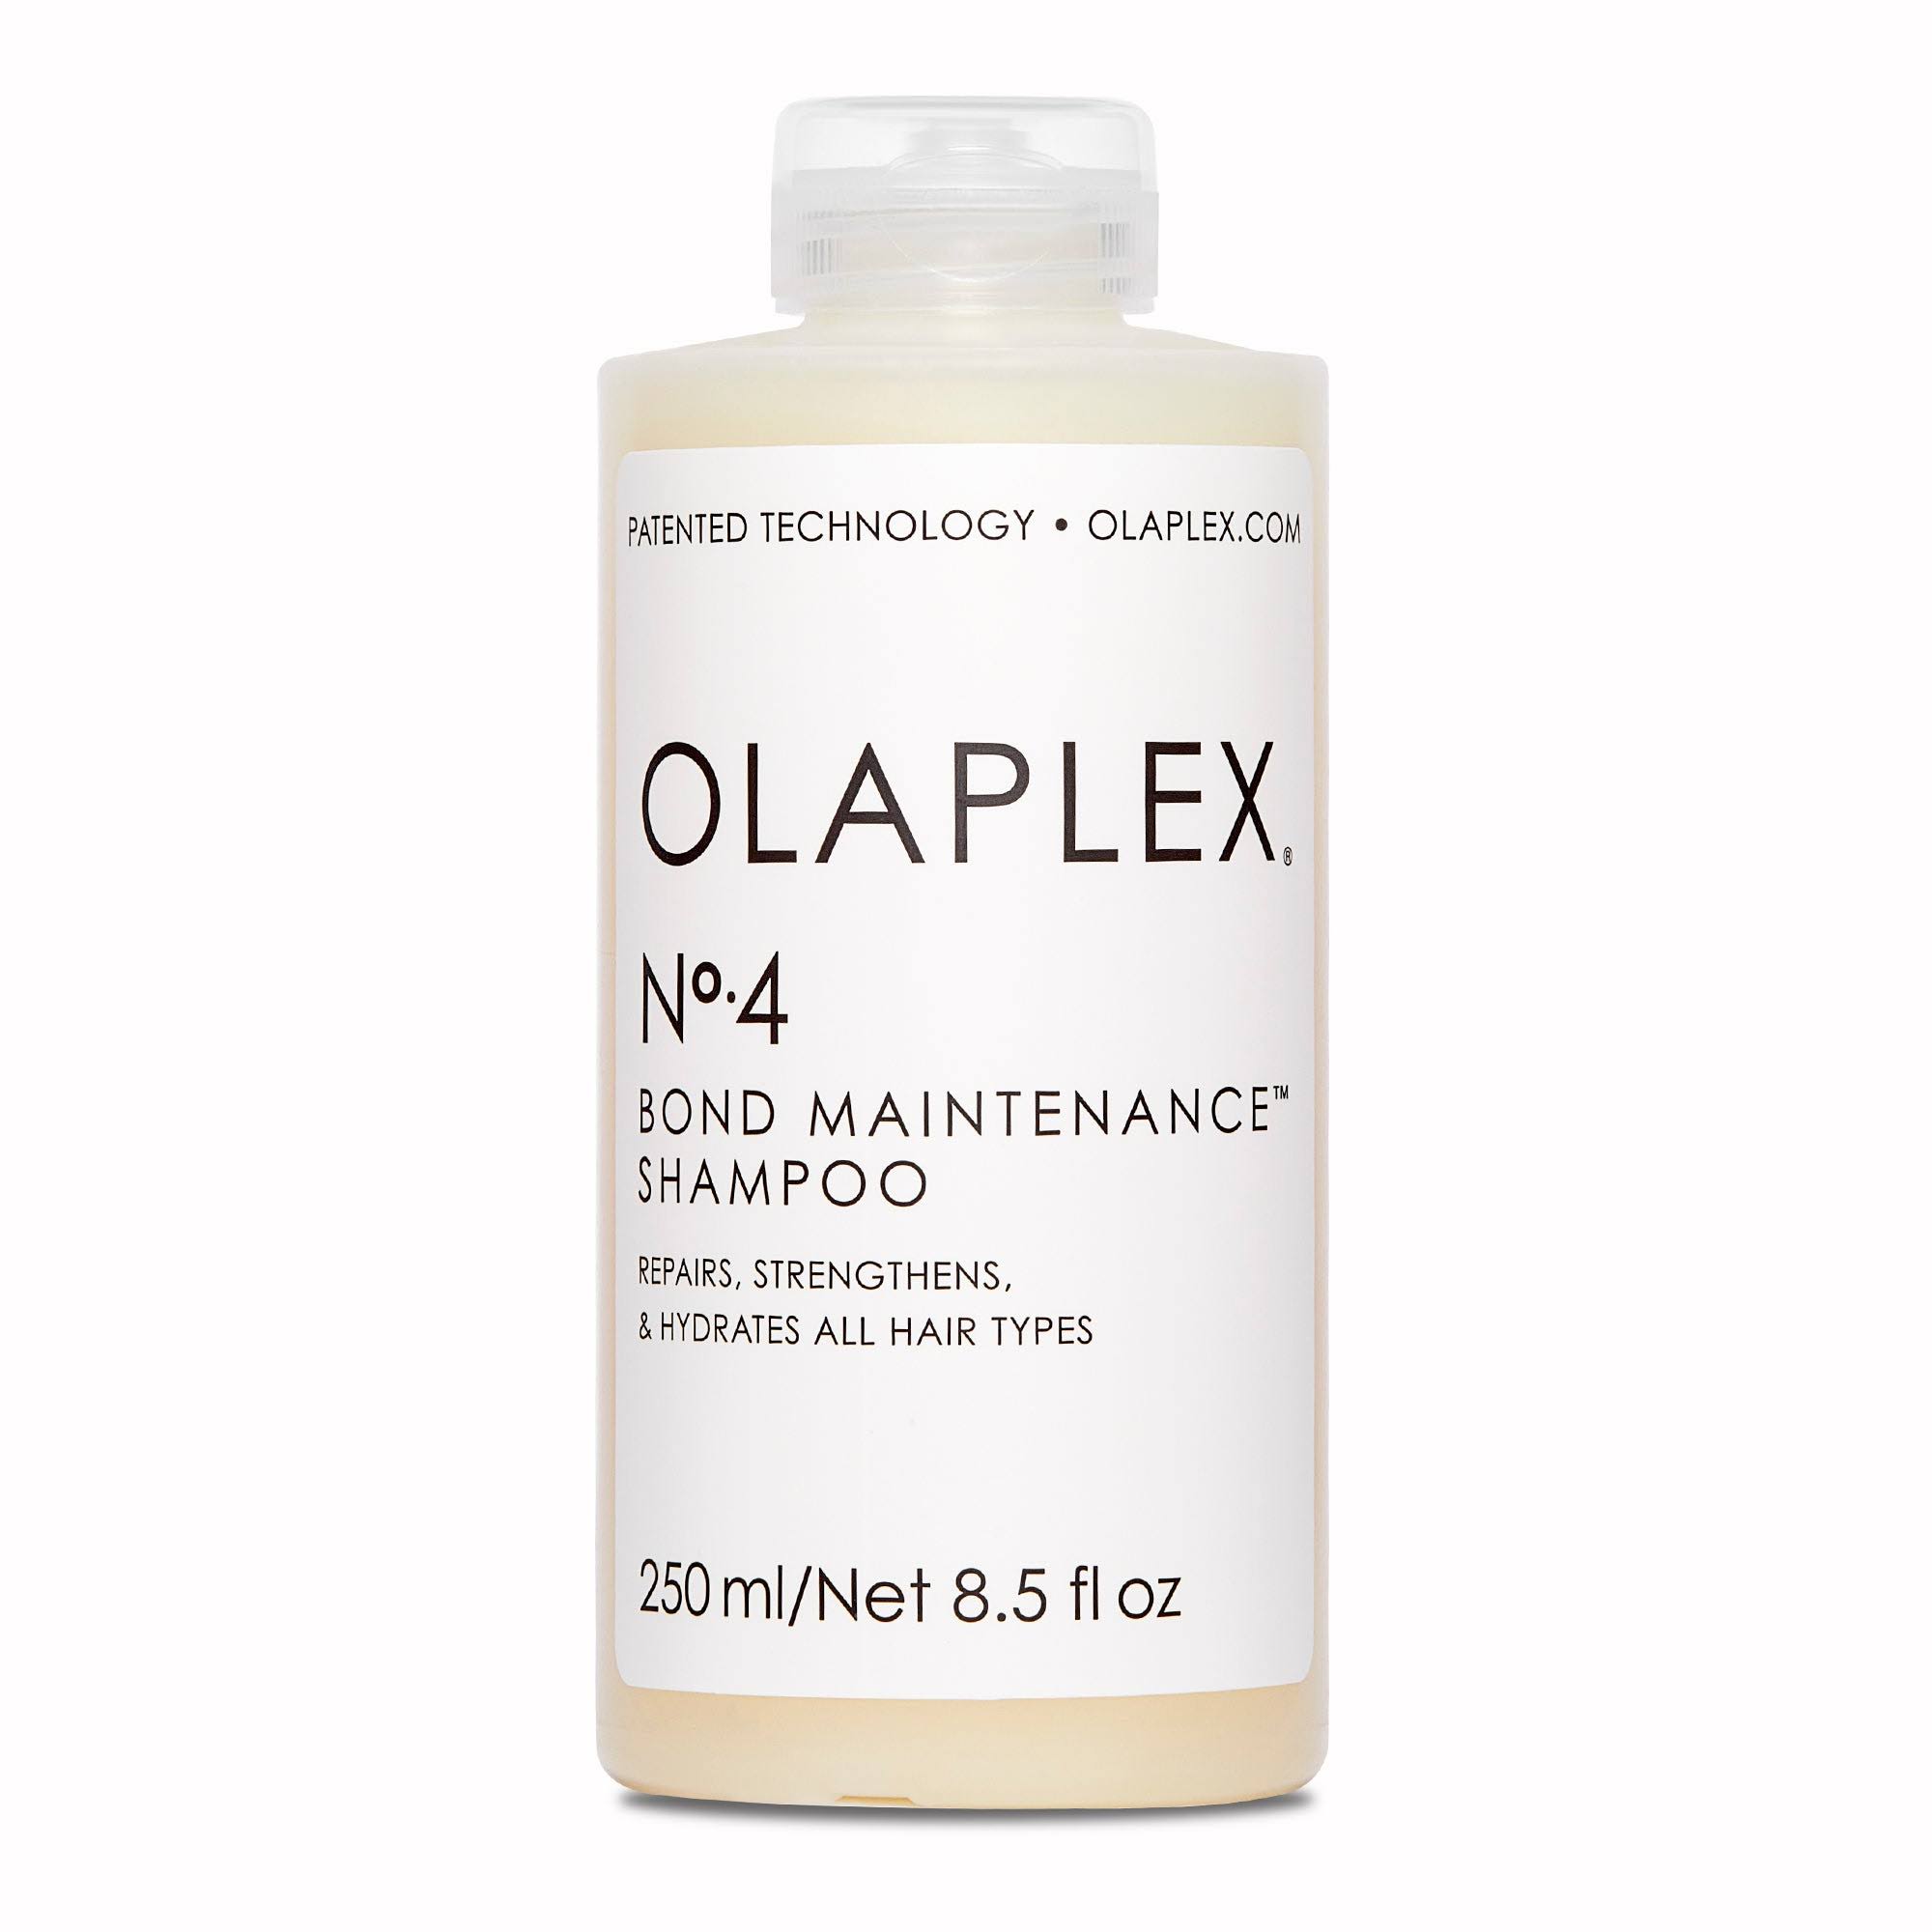 Olaplex Bond Maintenance Shampoo - Number 4, 250ml